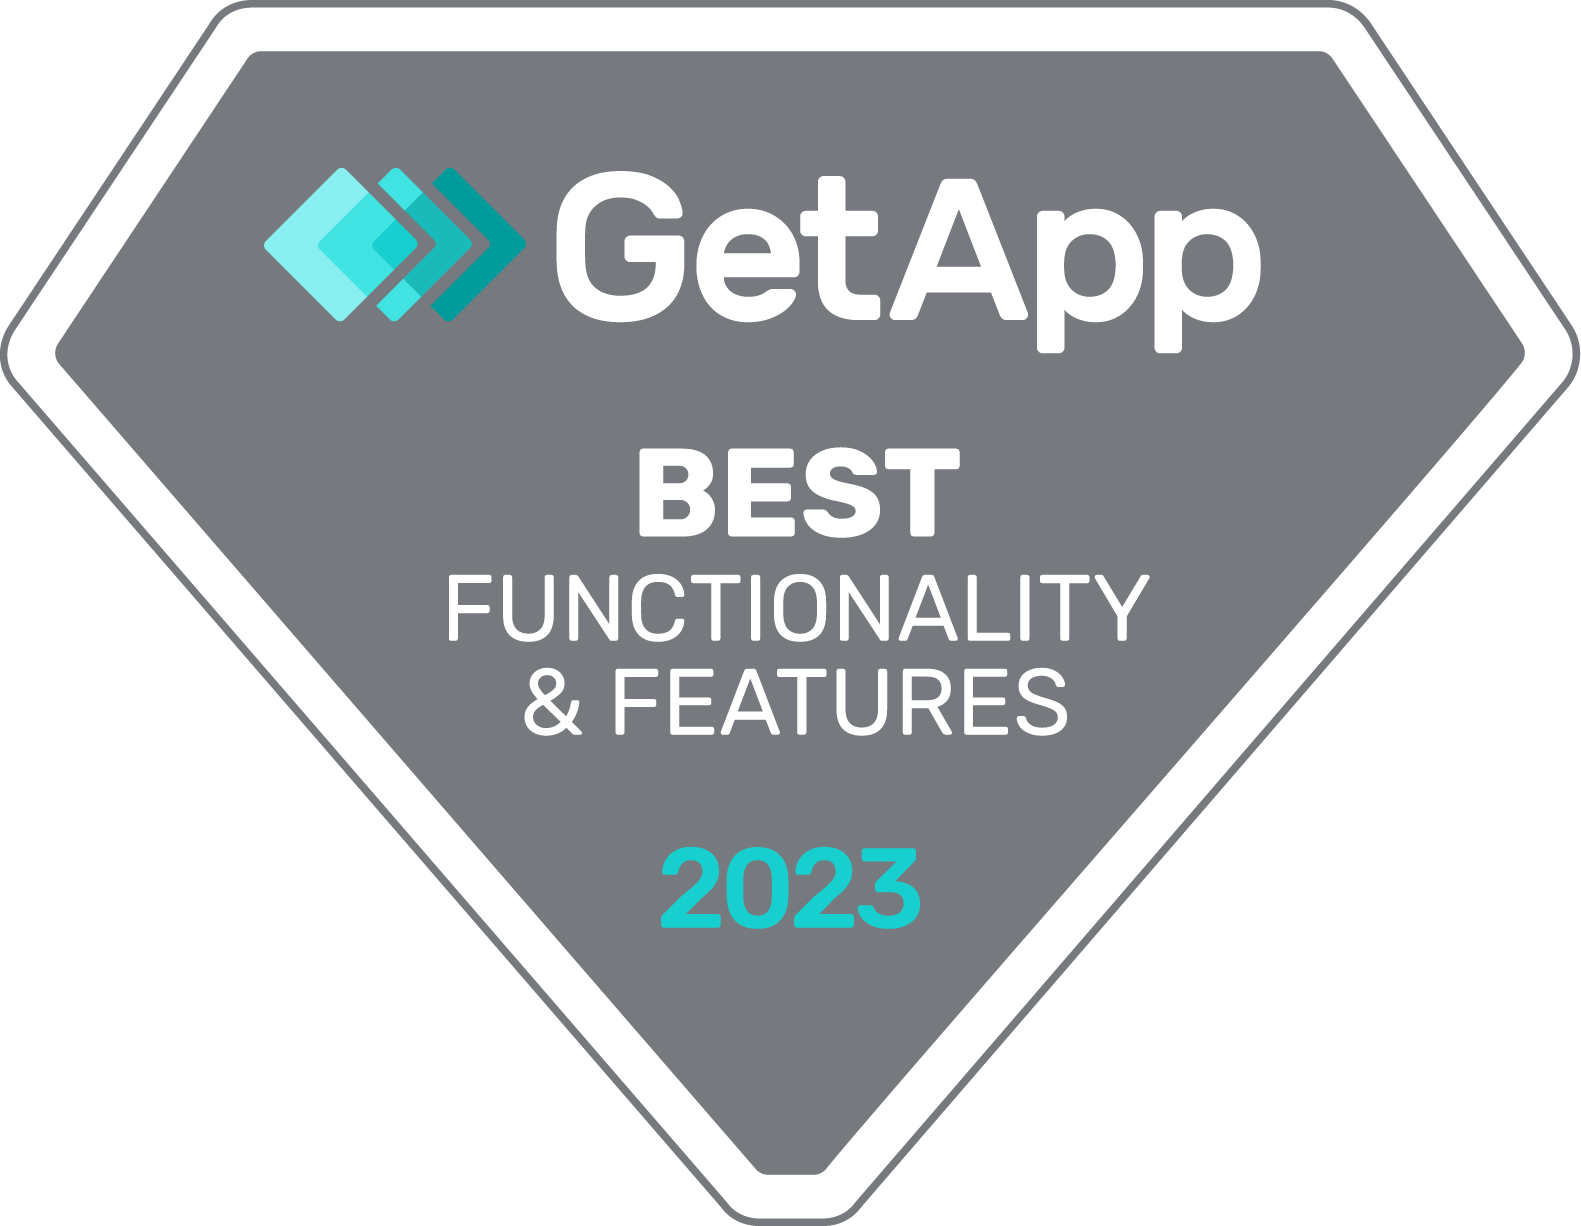 GetApp Best Functionality & Features 2023